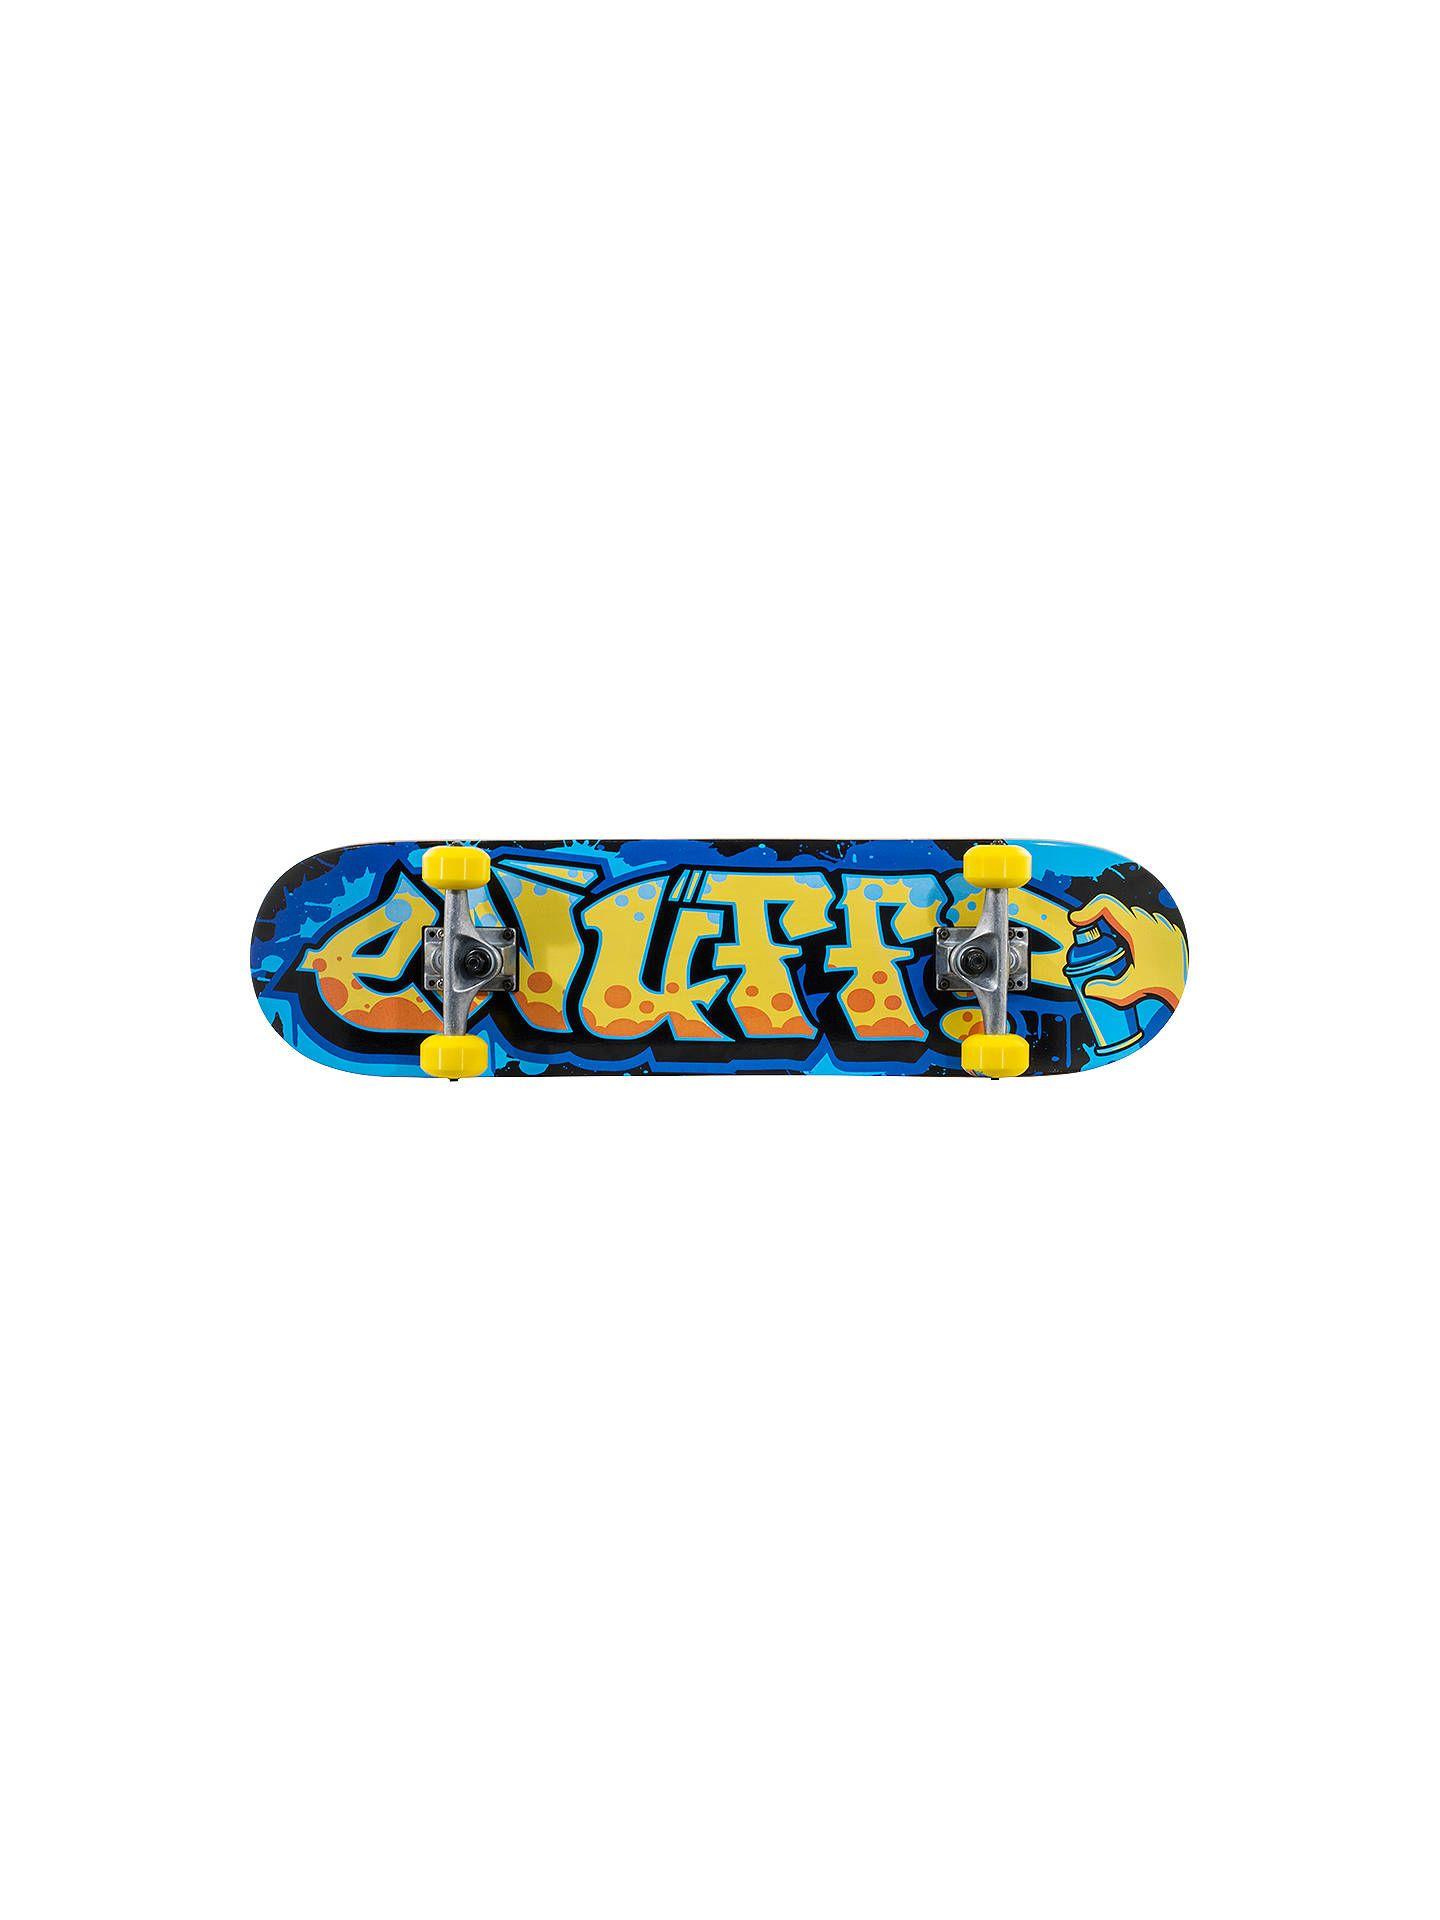 Graffiti Skateboarding Logo - Enuff Graffiti Skateboard, Orange/Blue at John Lewis & Partners